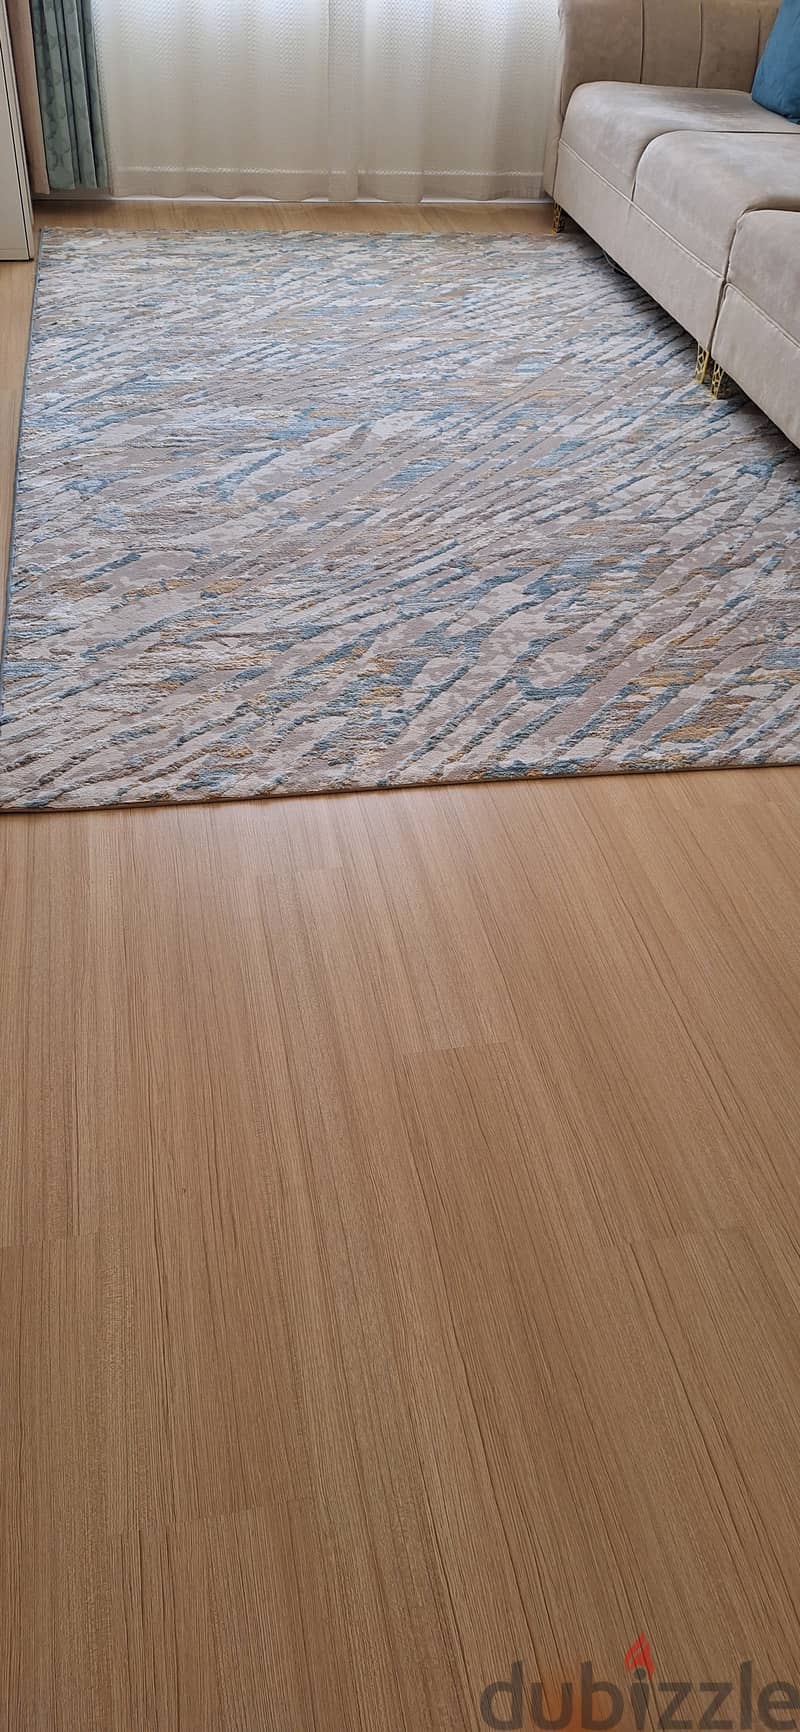 Carpet for sale 2